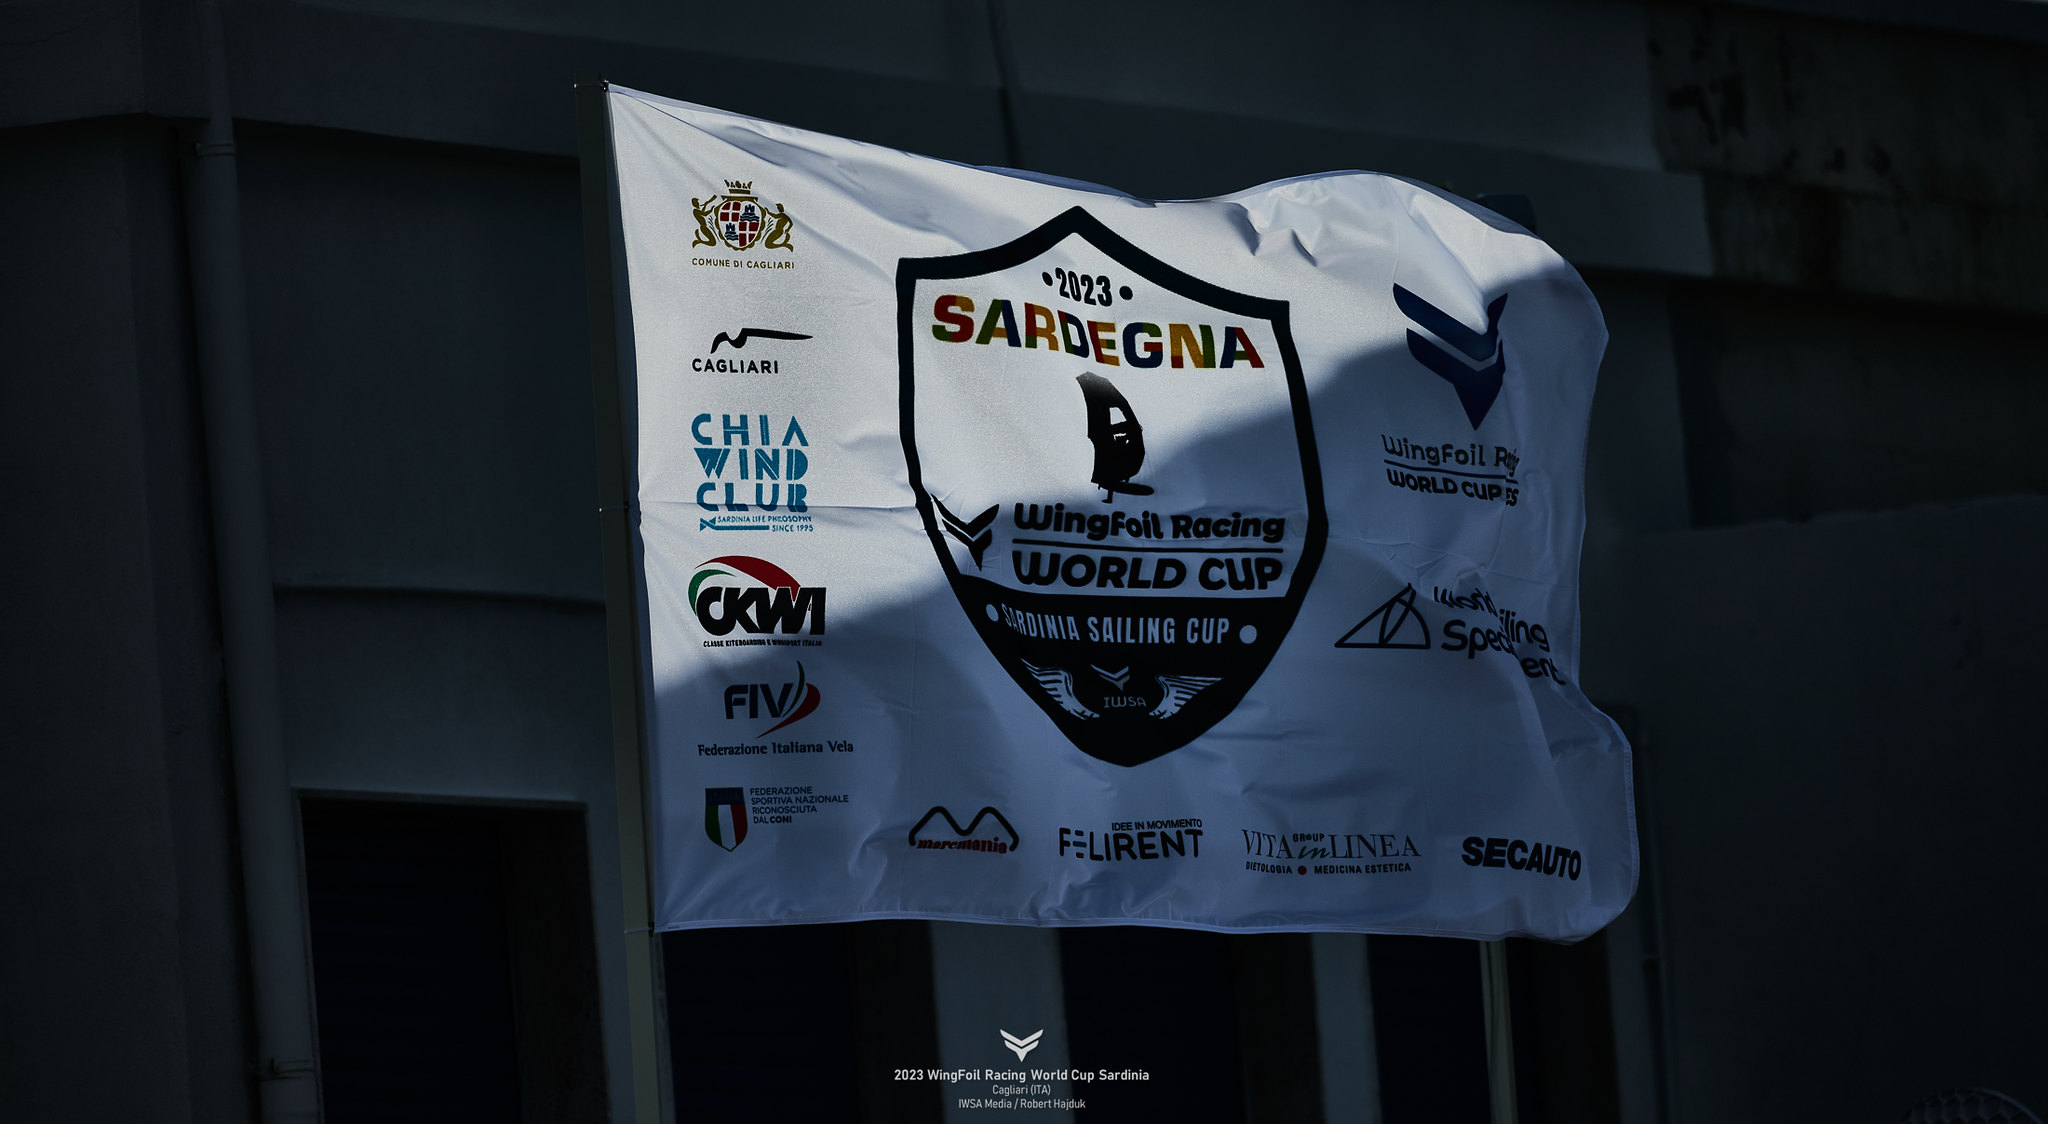 Internet_2023_10_17_WFRWC_D0_001_RH00006 - 2023 WingFoil World Cup Series Sardinia